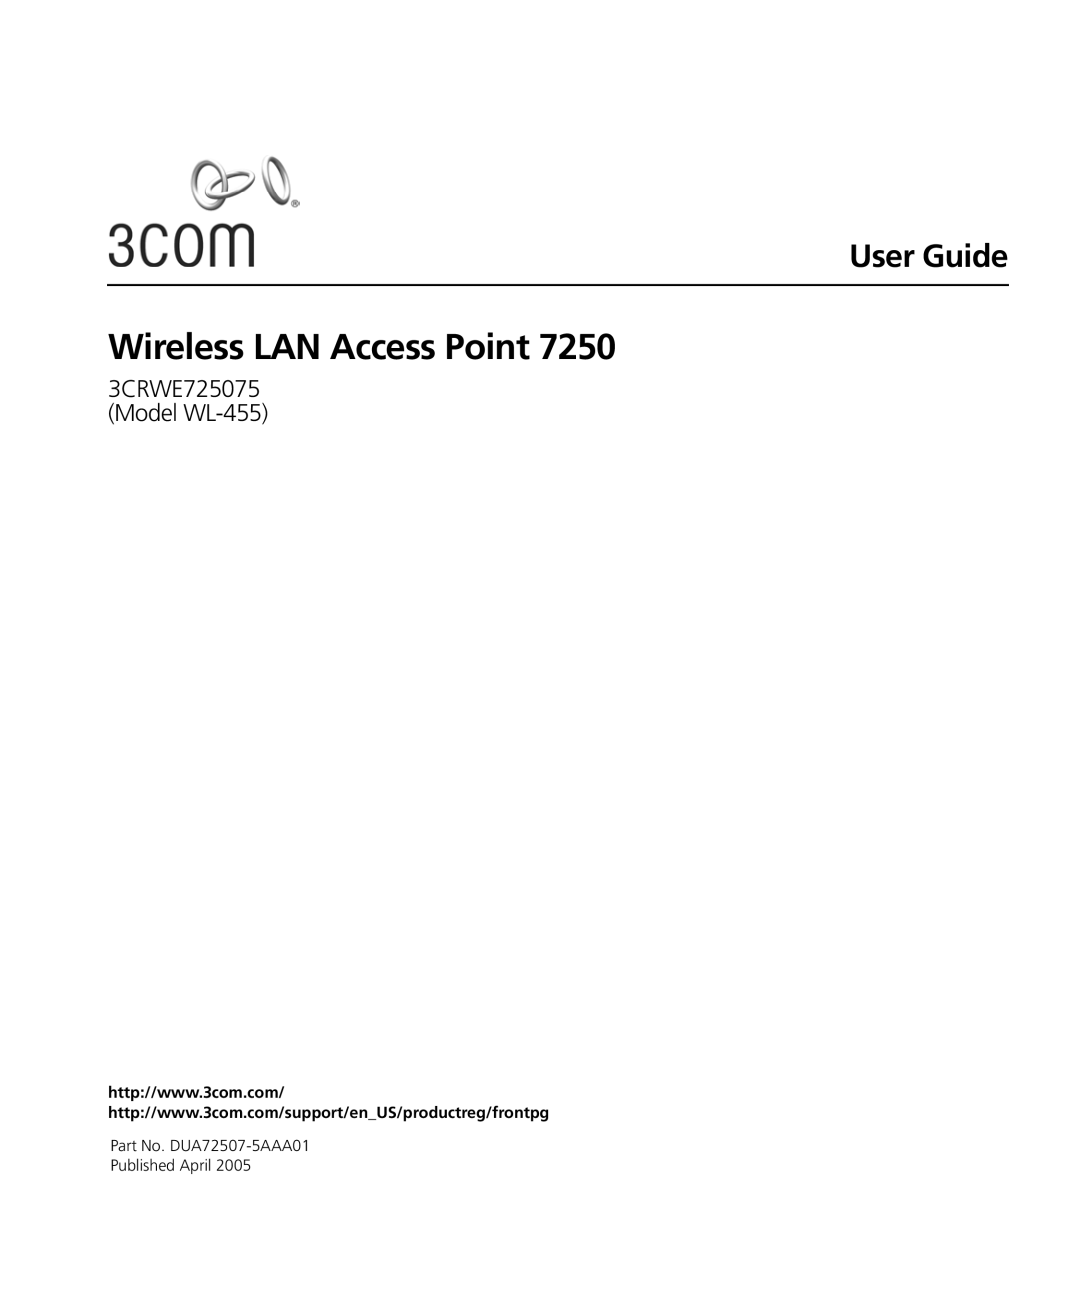 3Com WL-455 manual Wireless LAN Access Point 